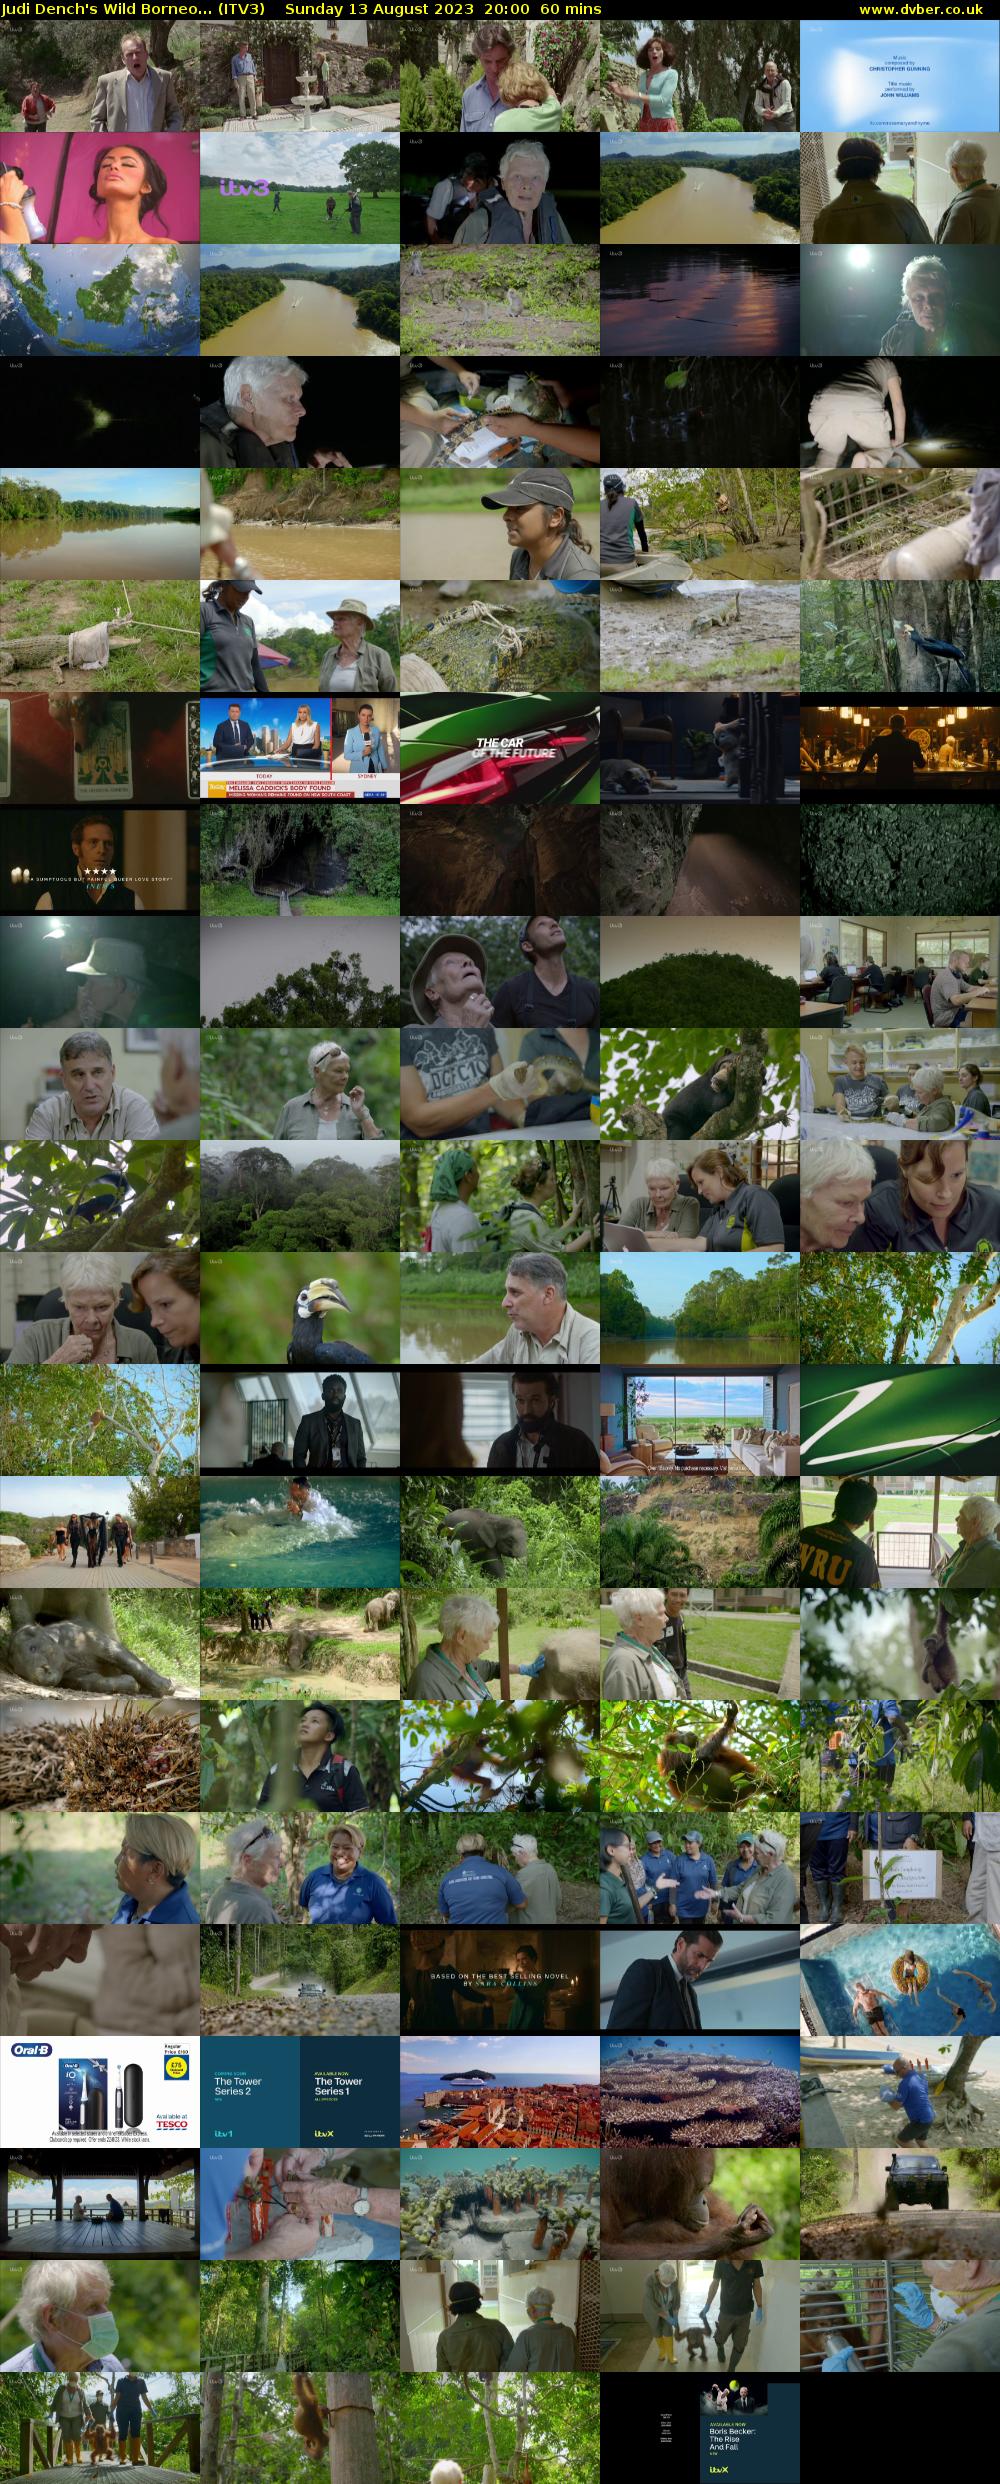 Judi Dench's Wild Borneo... (ITV3) Sunday 13 August 2023 20:00 - 21:00